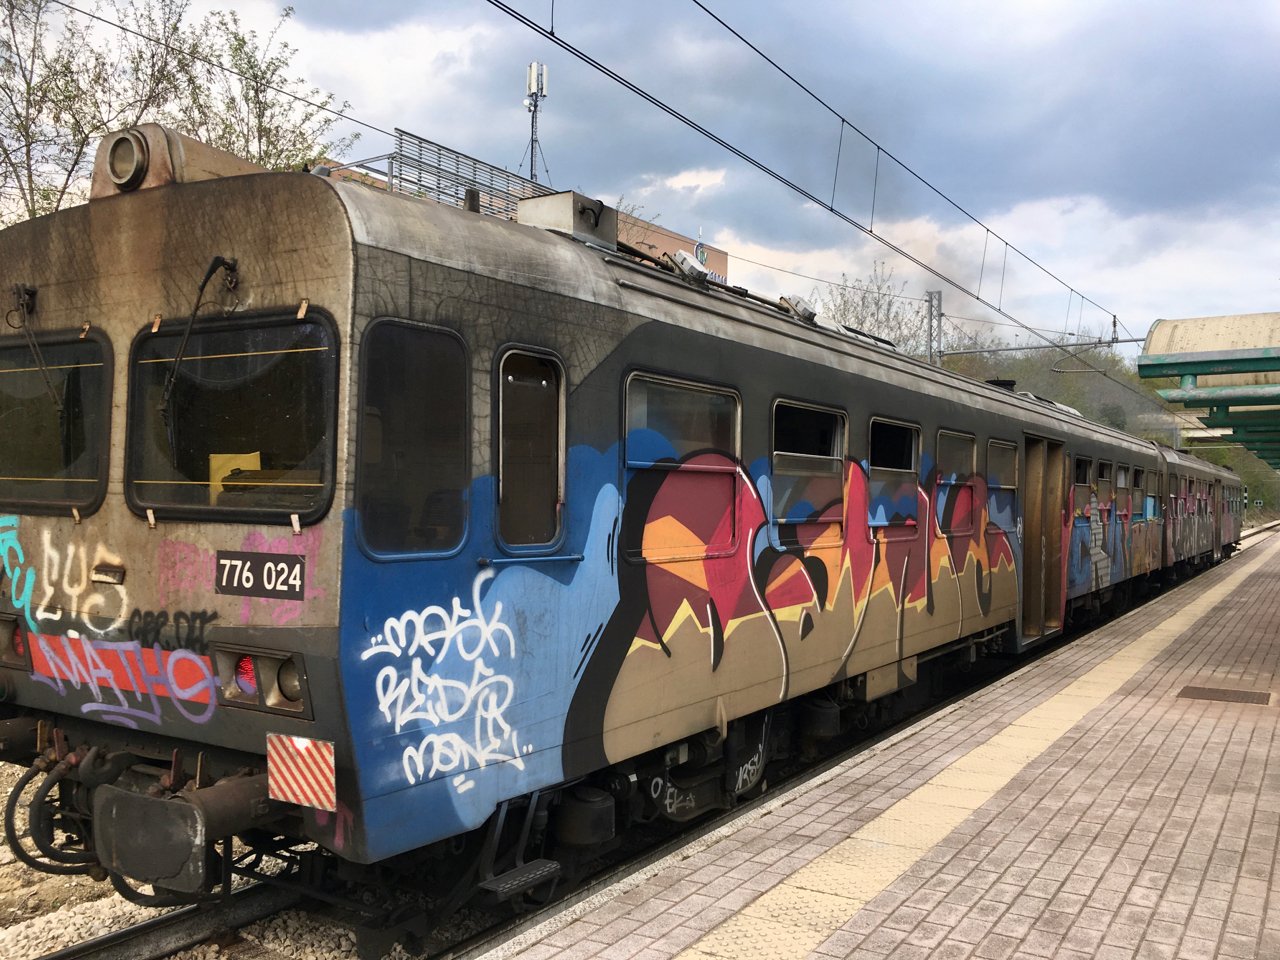 Italo vs TrenItalia vs ItaliaRail [An Expat’s Guide to Train Travel in Italy]